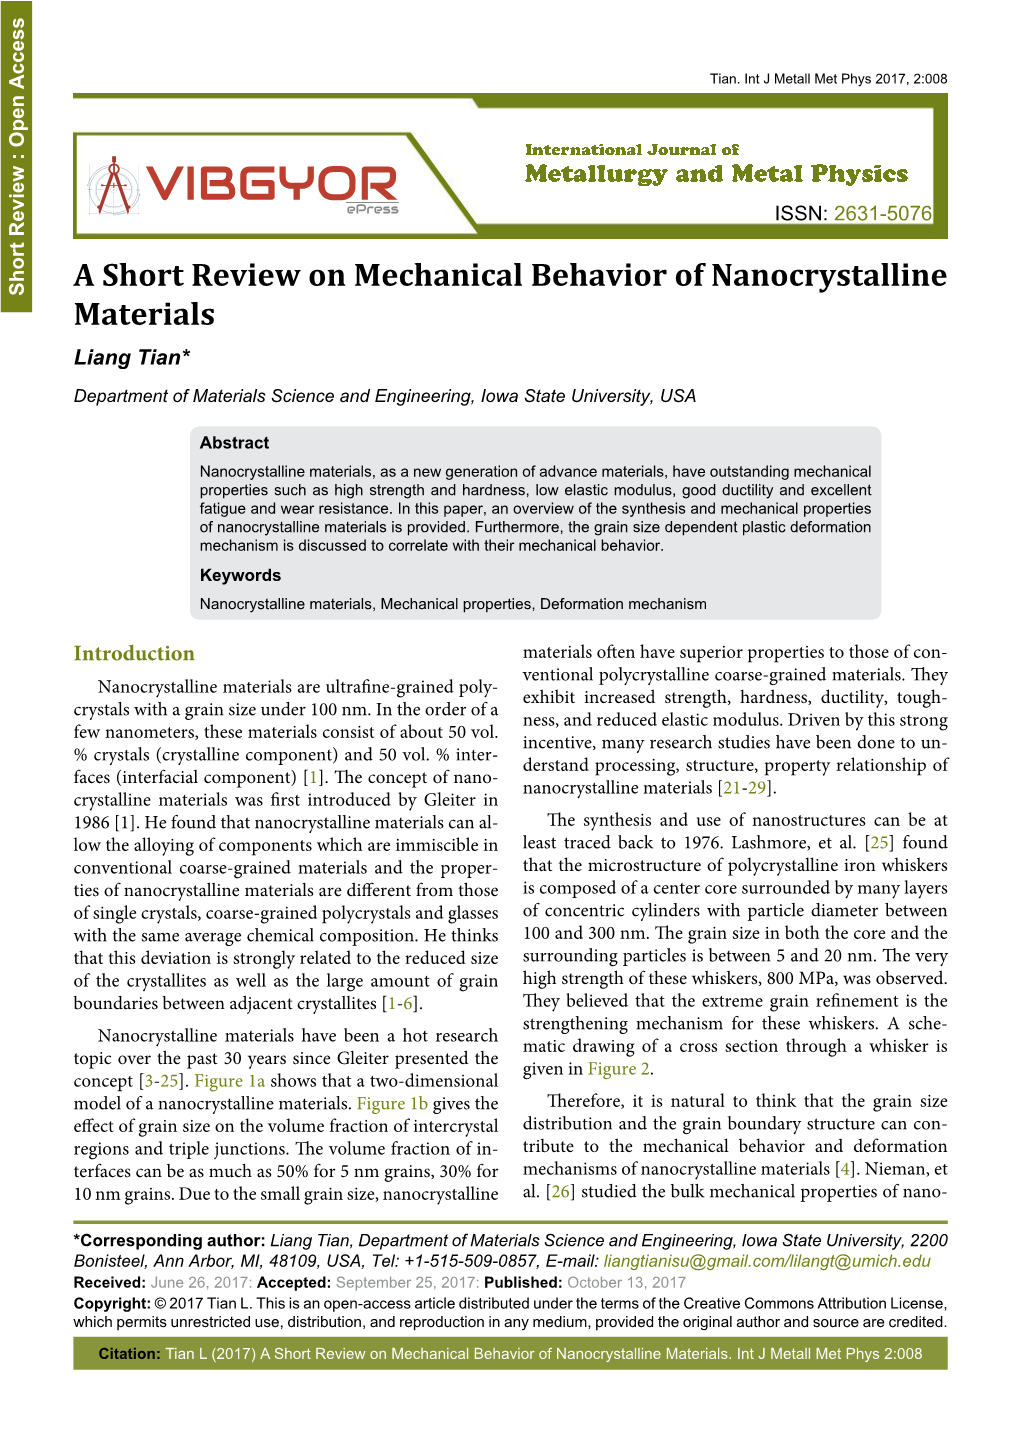 A Short Review on Mechanical Behavior of Nanocrystalline Materials